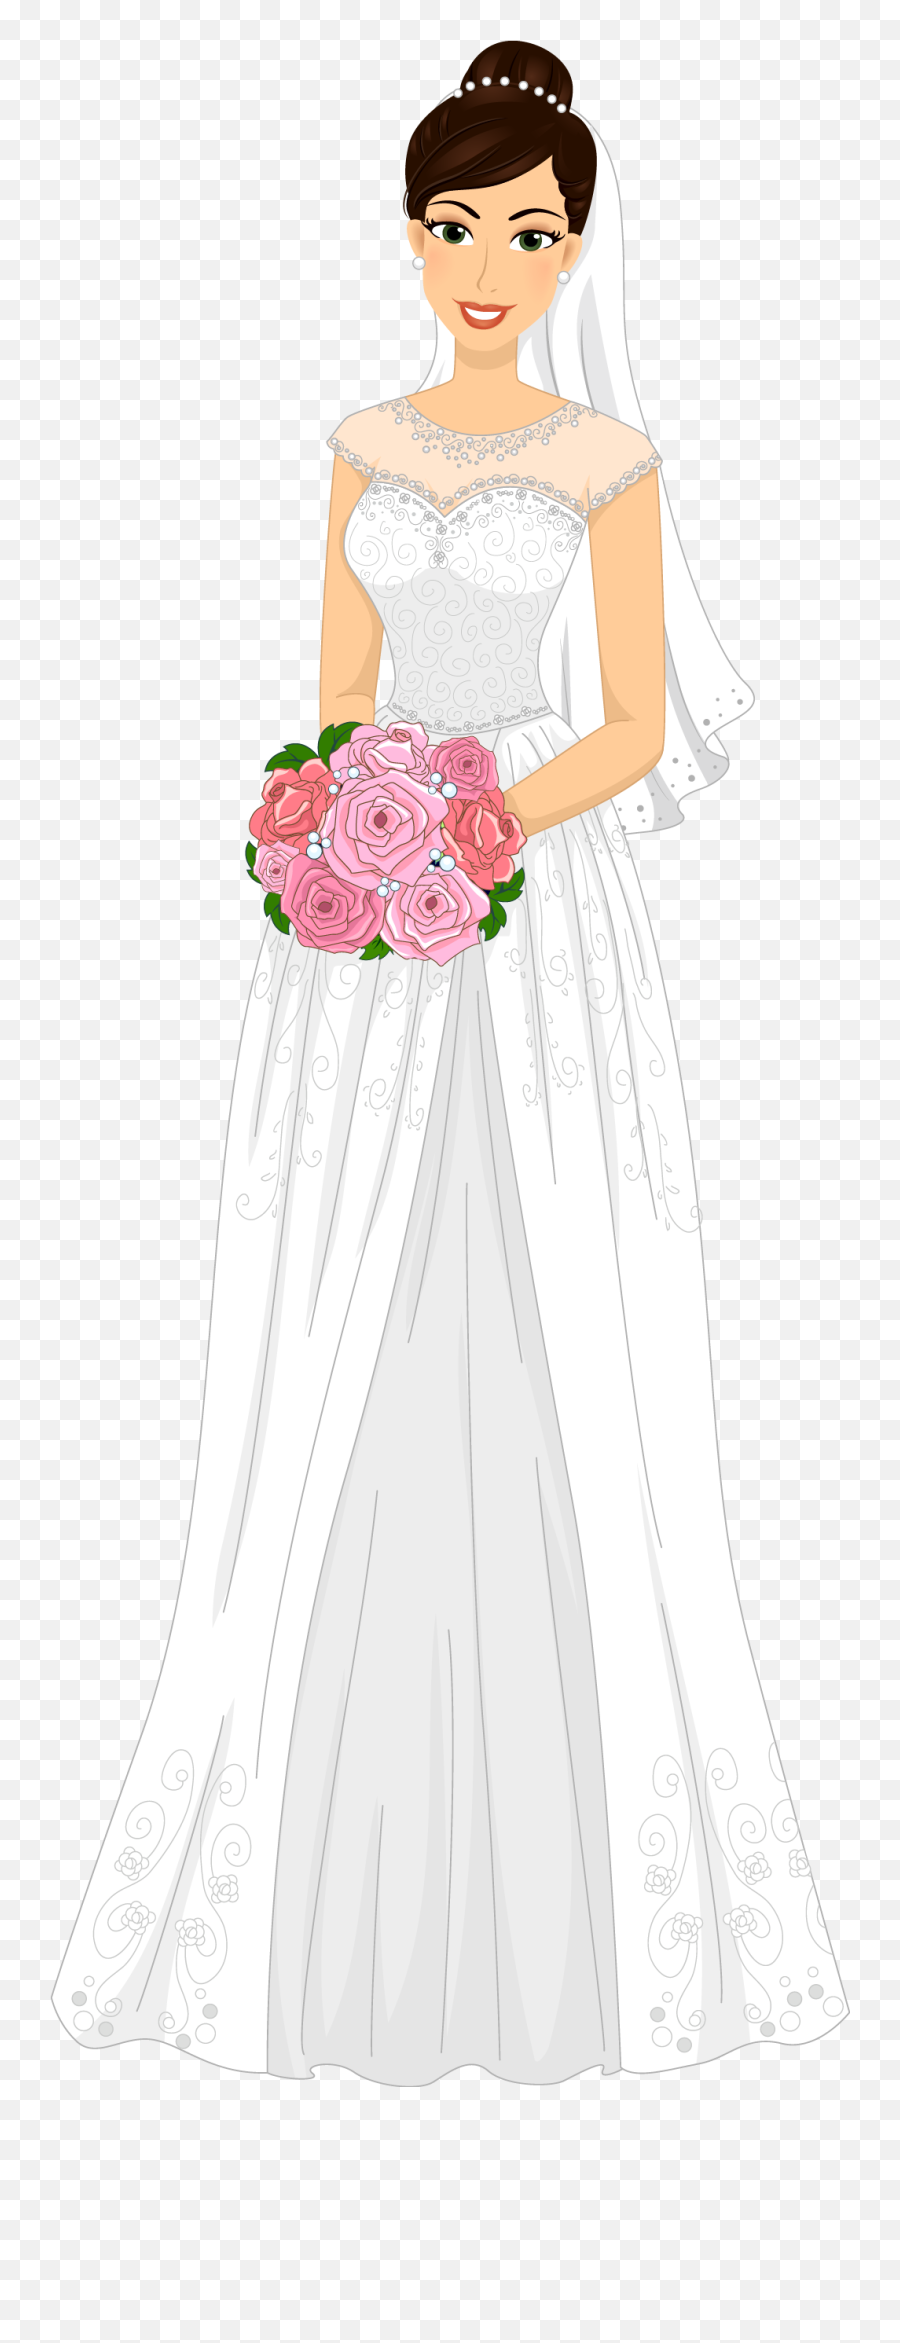 Bride Png Image Free Download Emoji,Bride Png